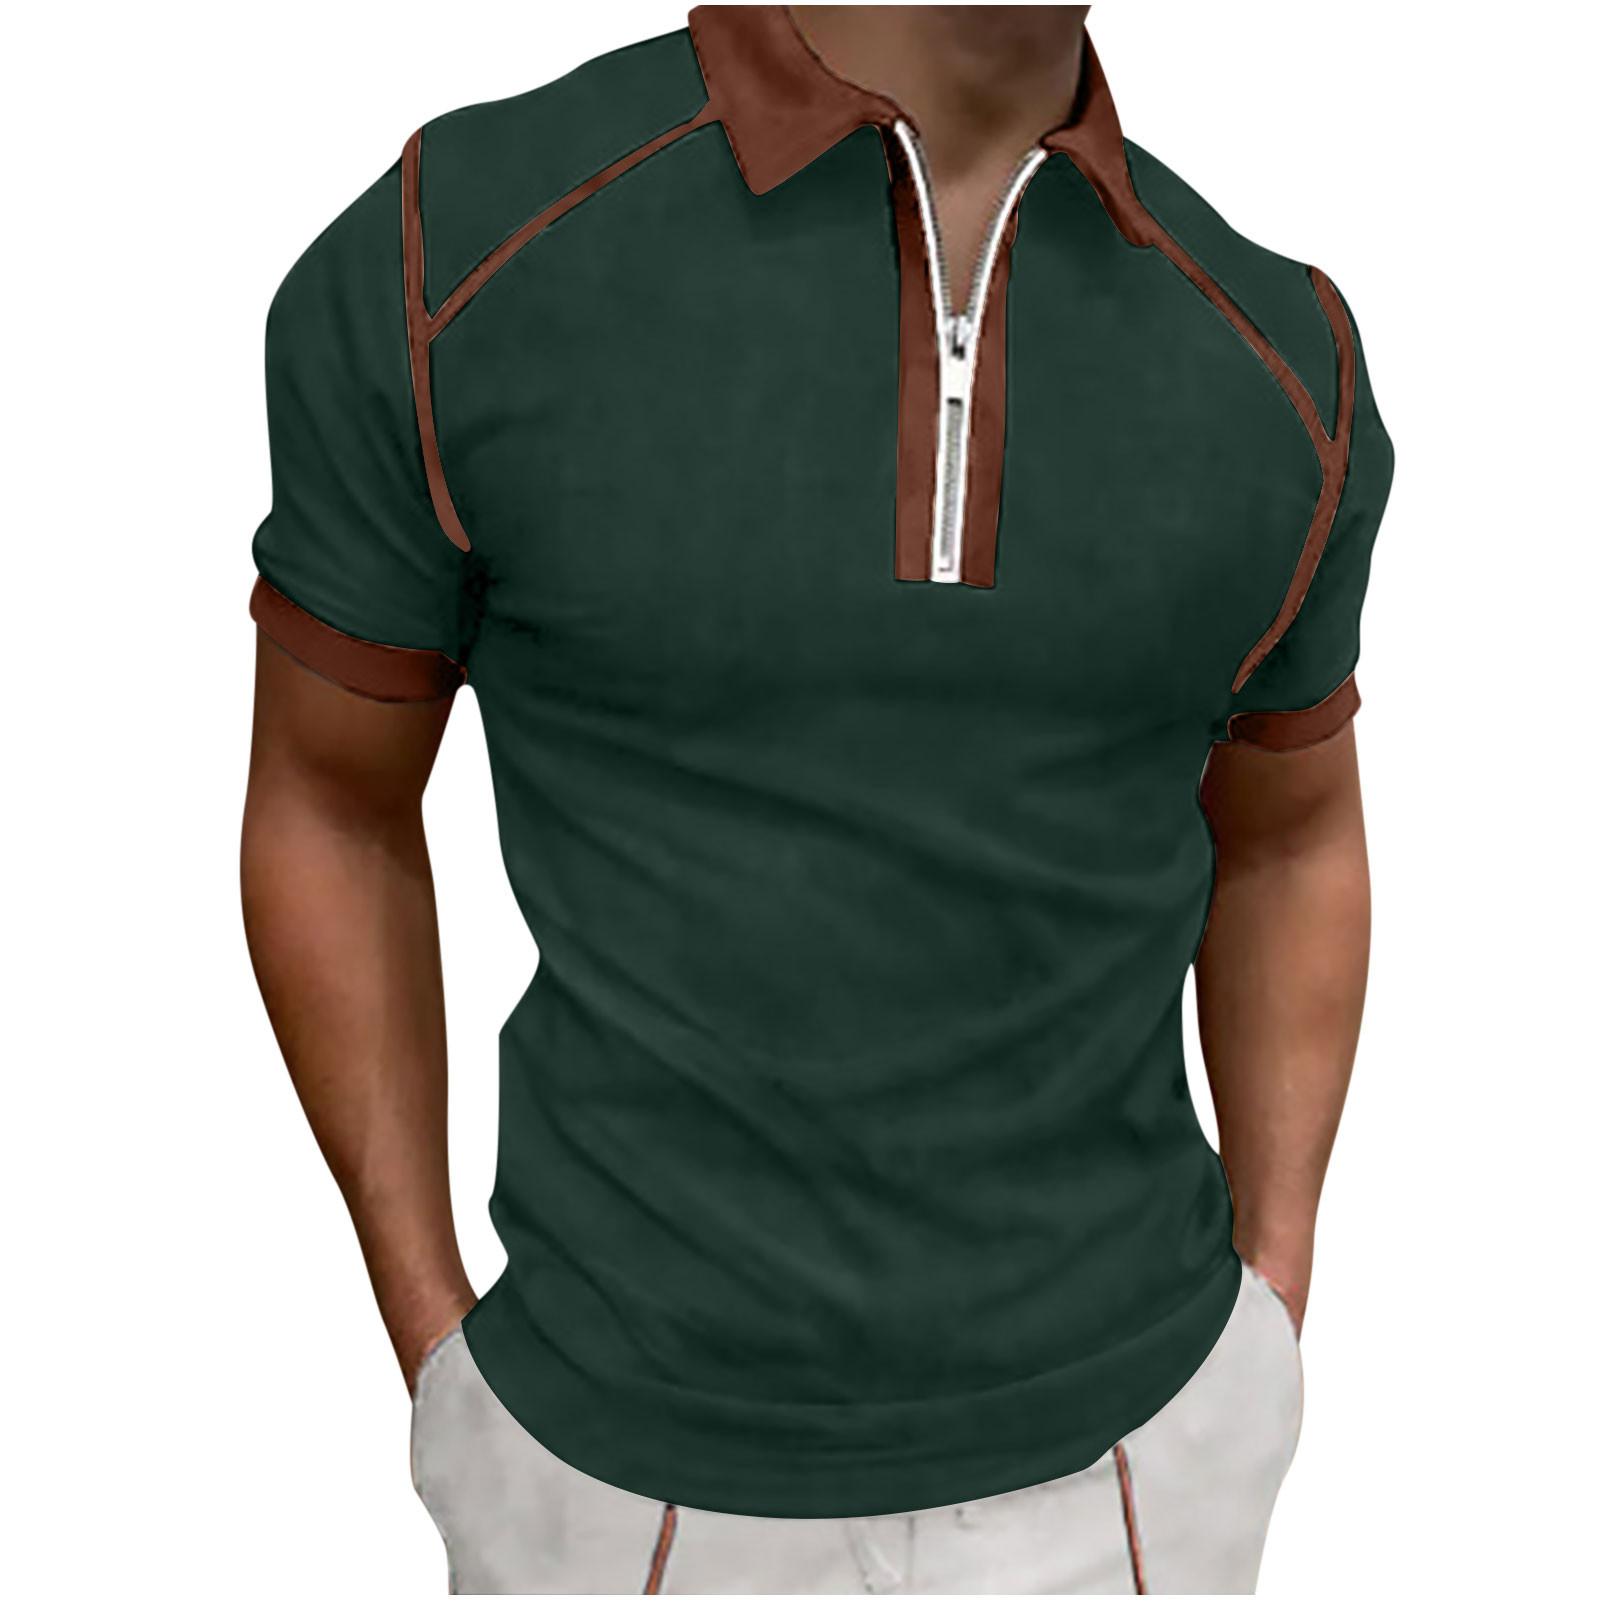 RYRJJ Men's Classic Short Sleeve Polo Shirt Zip Up Casual Summer Slim Fit T- Shirts Raglan Sleeve Workout Golf Tees Tops(Green,XXL)